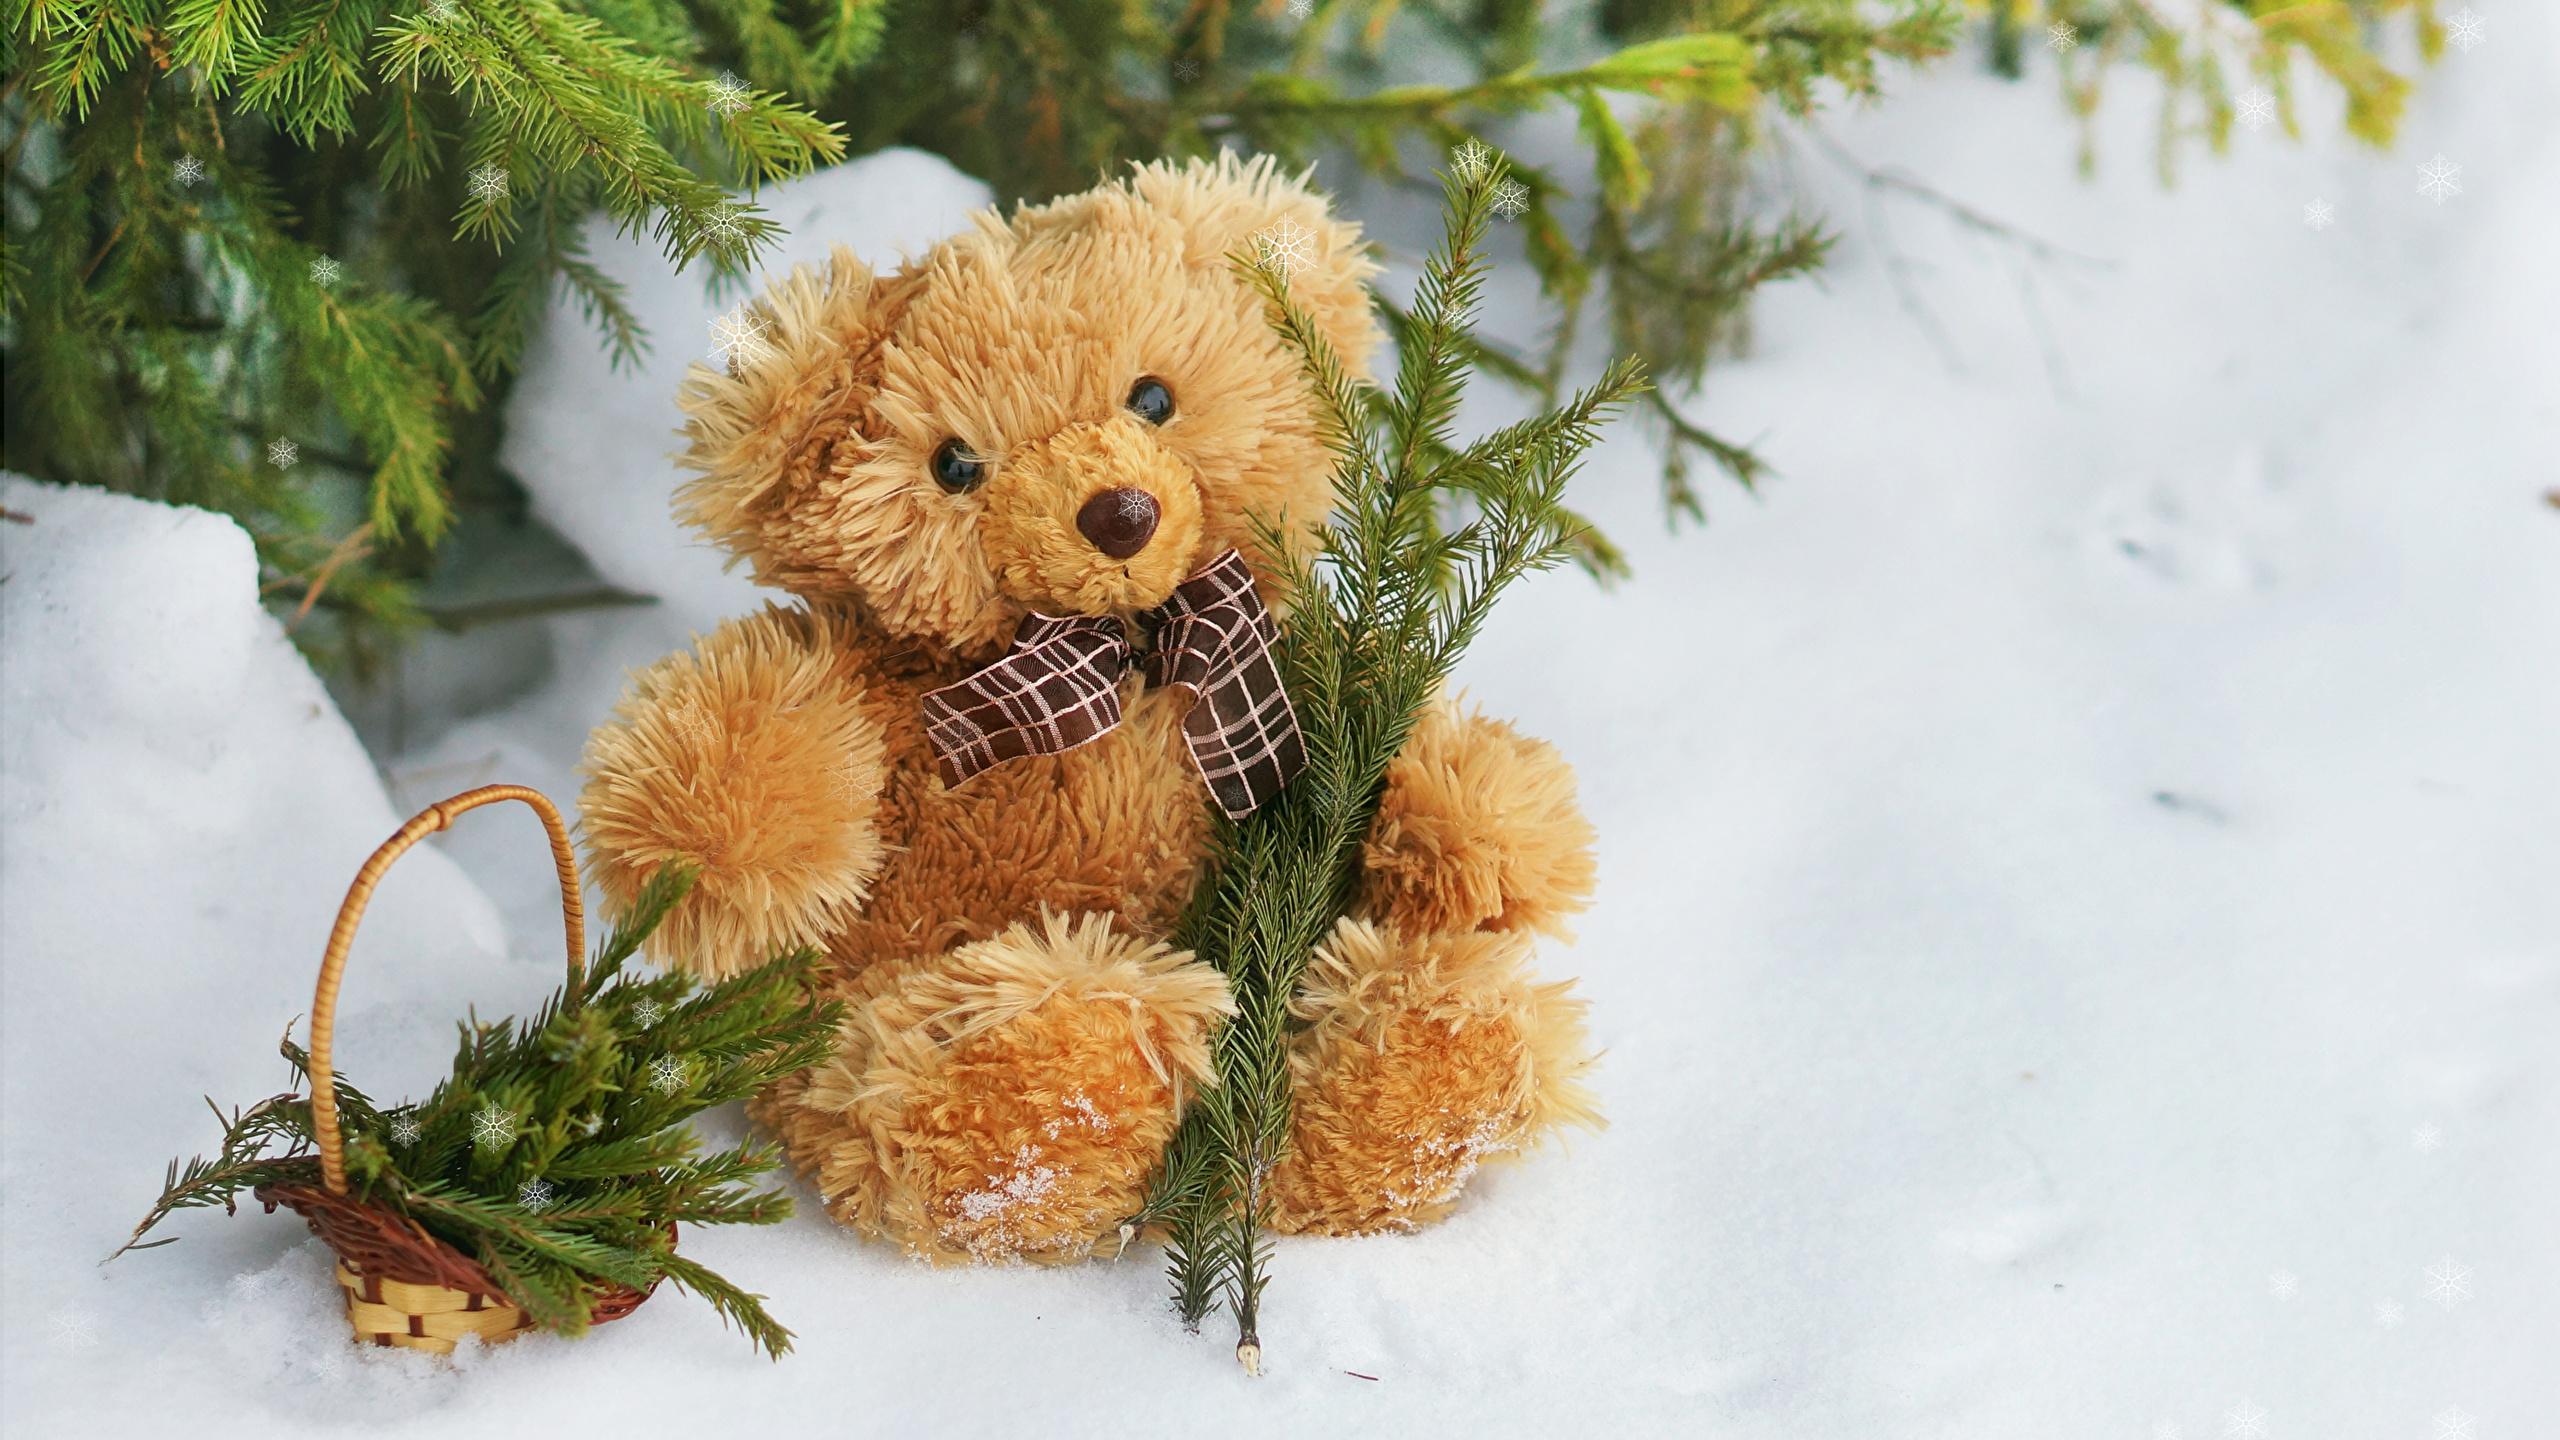 Winter Teddy Bears Wallpapers - Top Free Winter Teddy Bears Backgrounds ...